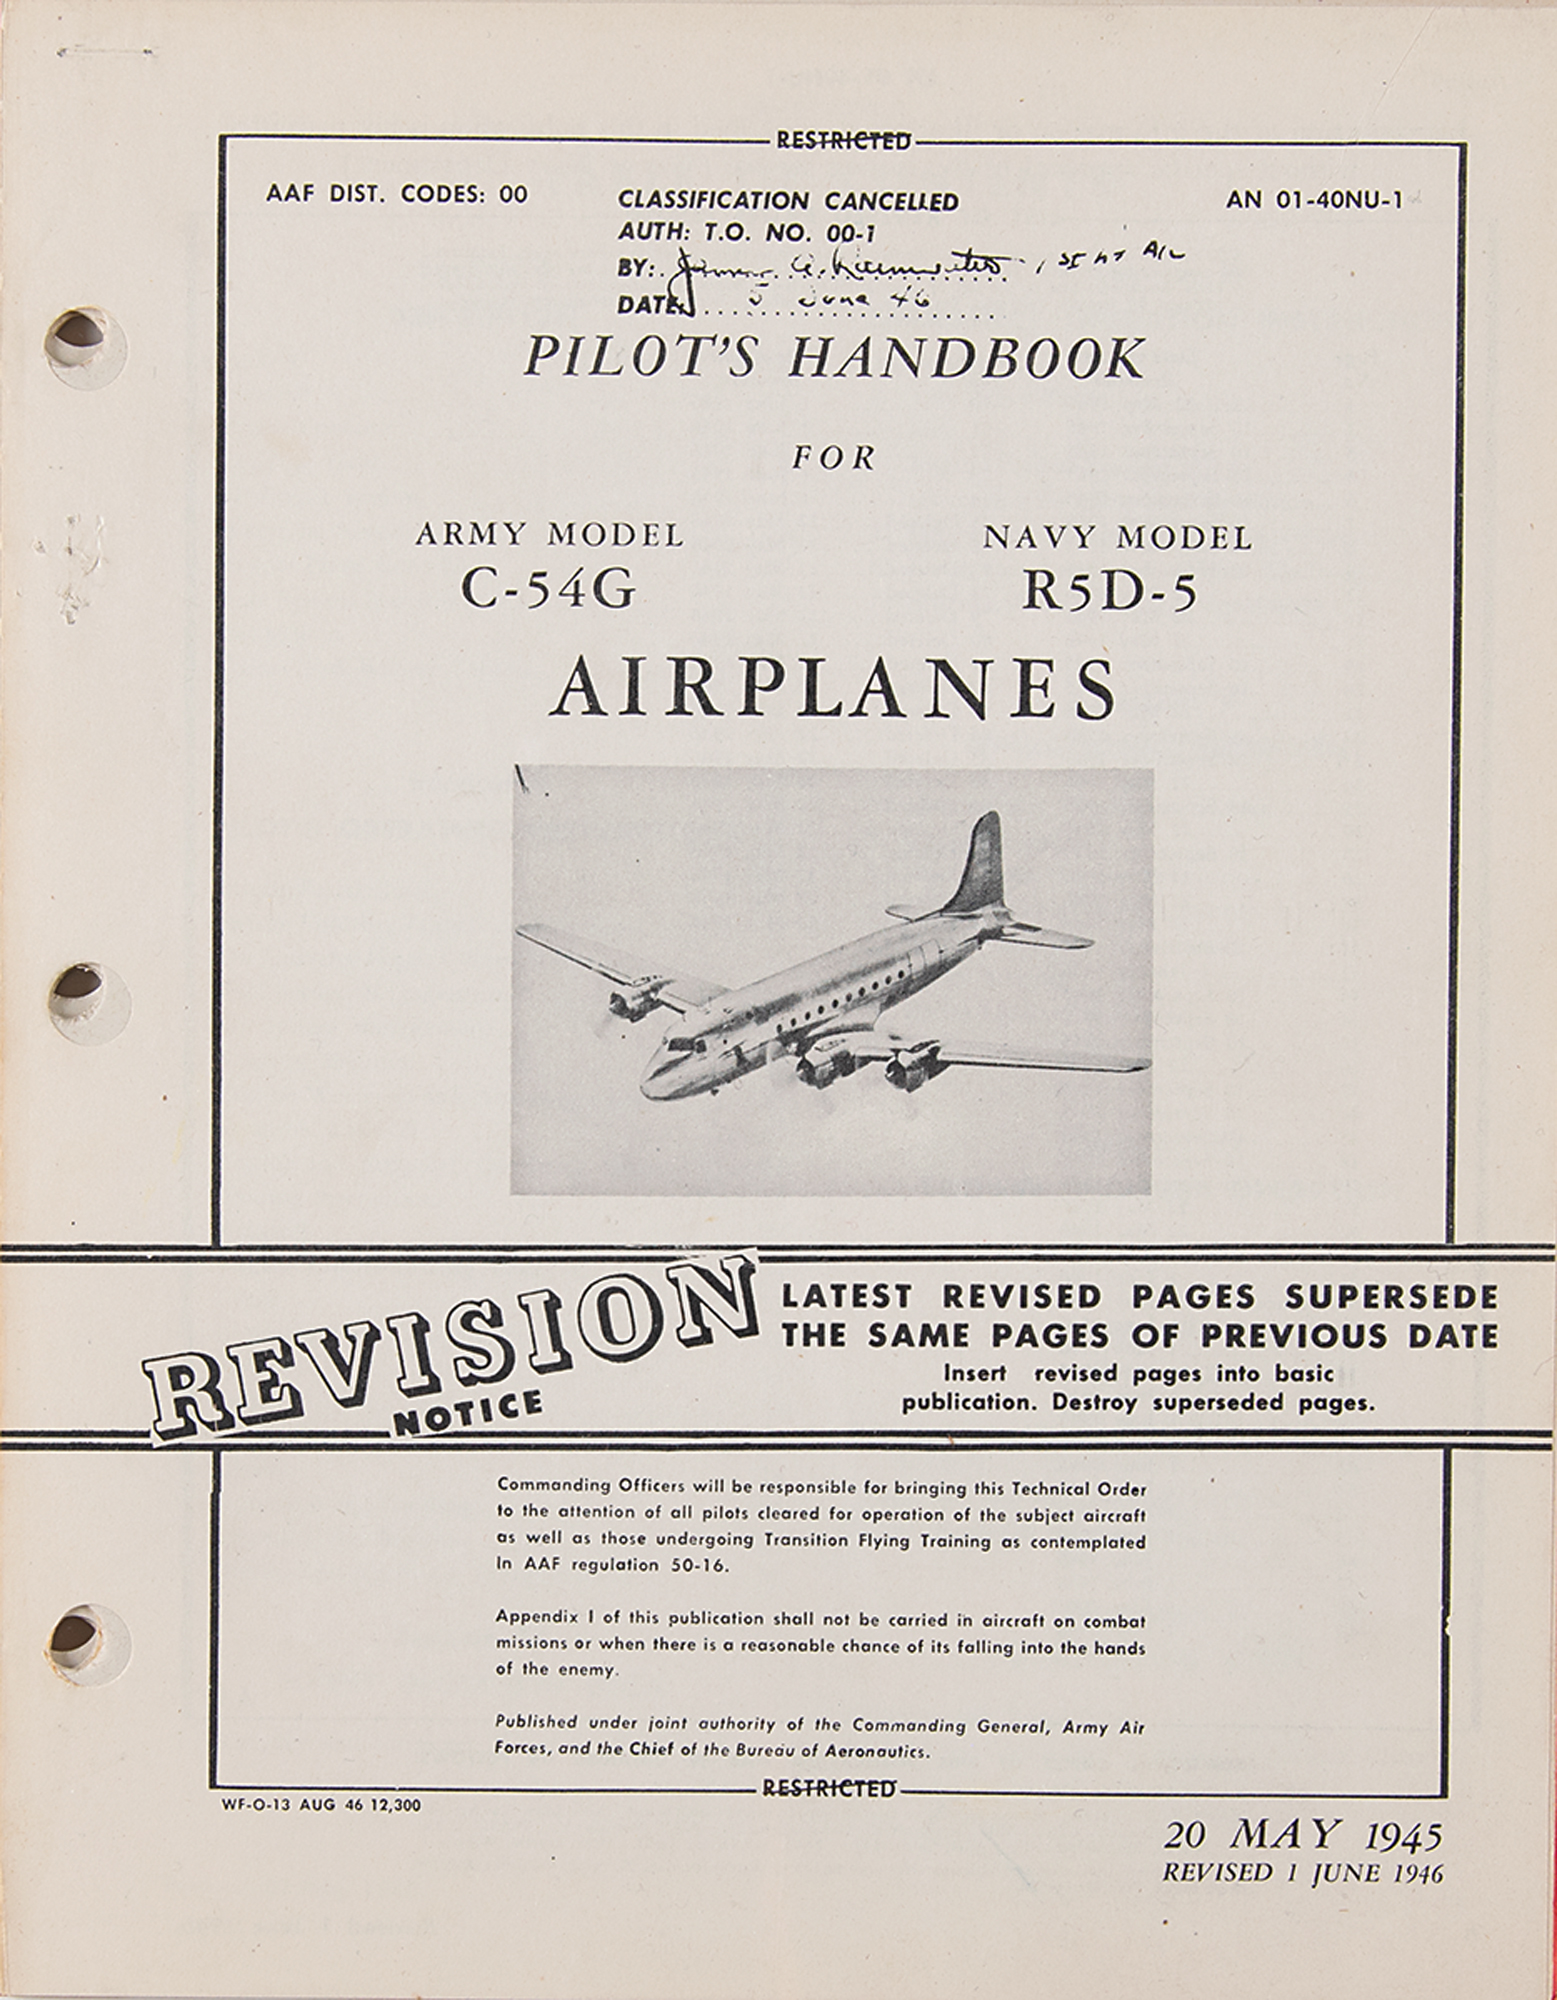 Lot #141 Douglas Skymaster: Army and Navy Pilot's Handbook